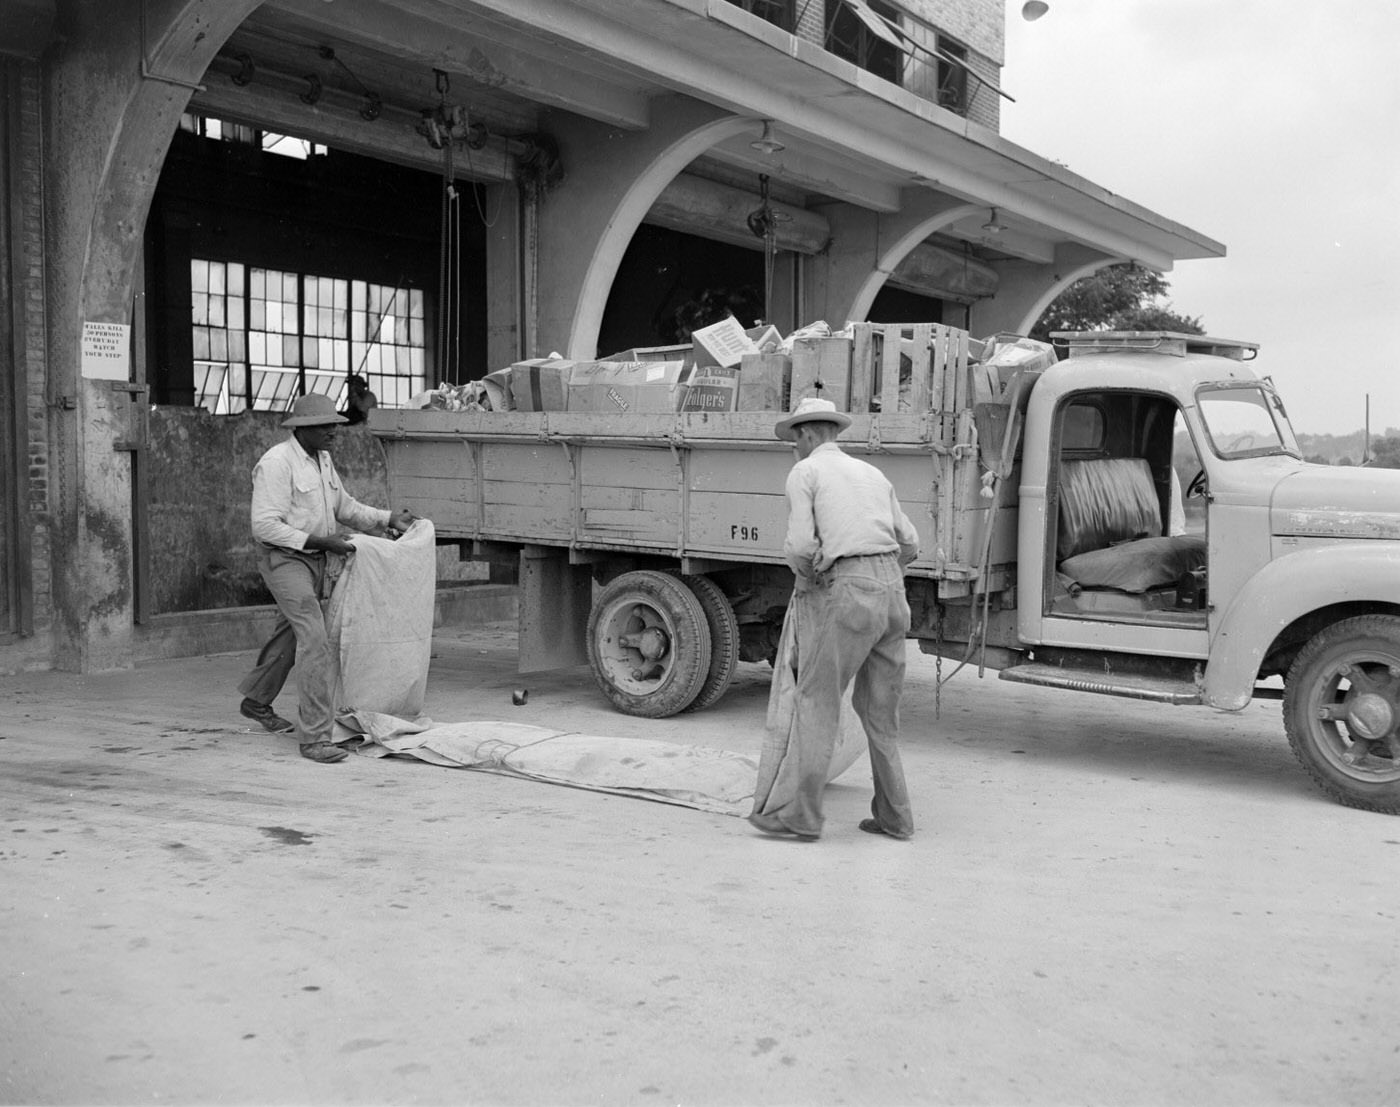 Men Folding Drape by Sanitation Truck, 1953.